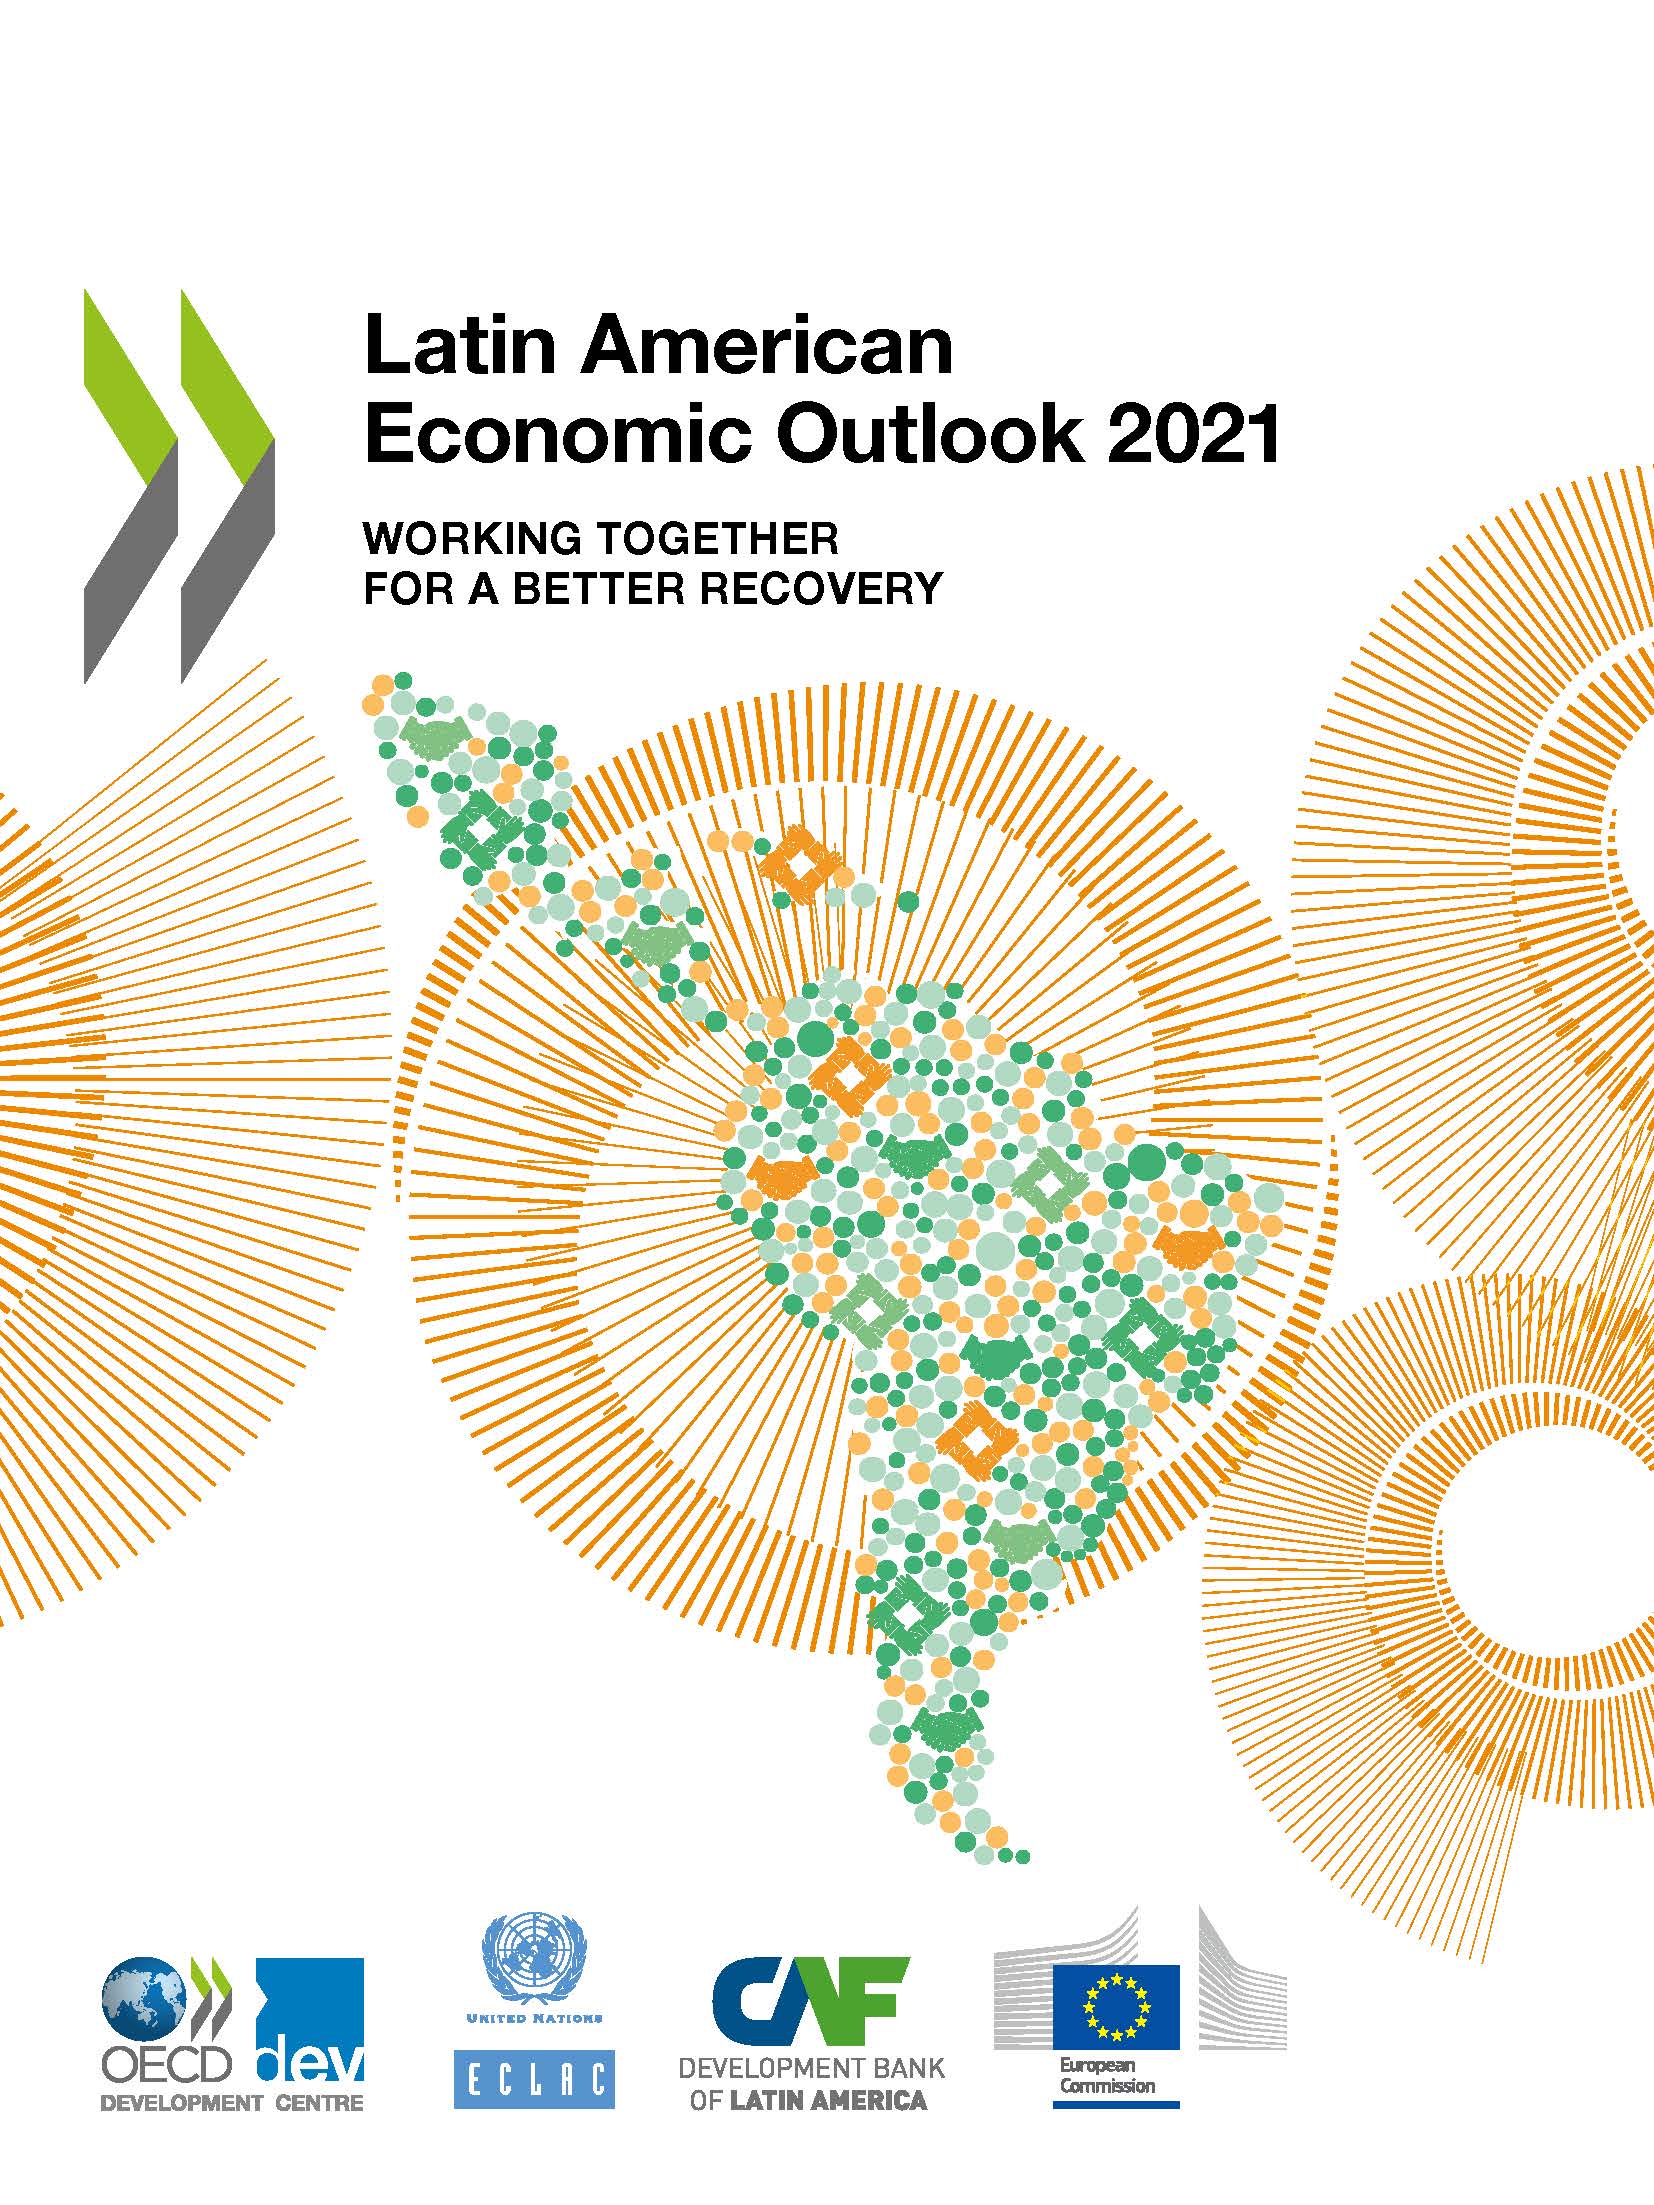 The Latin American Economic Outlook 2021